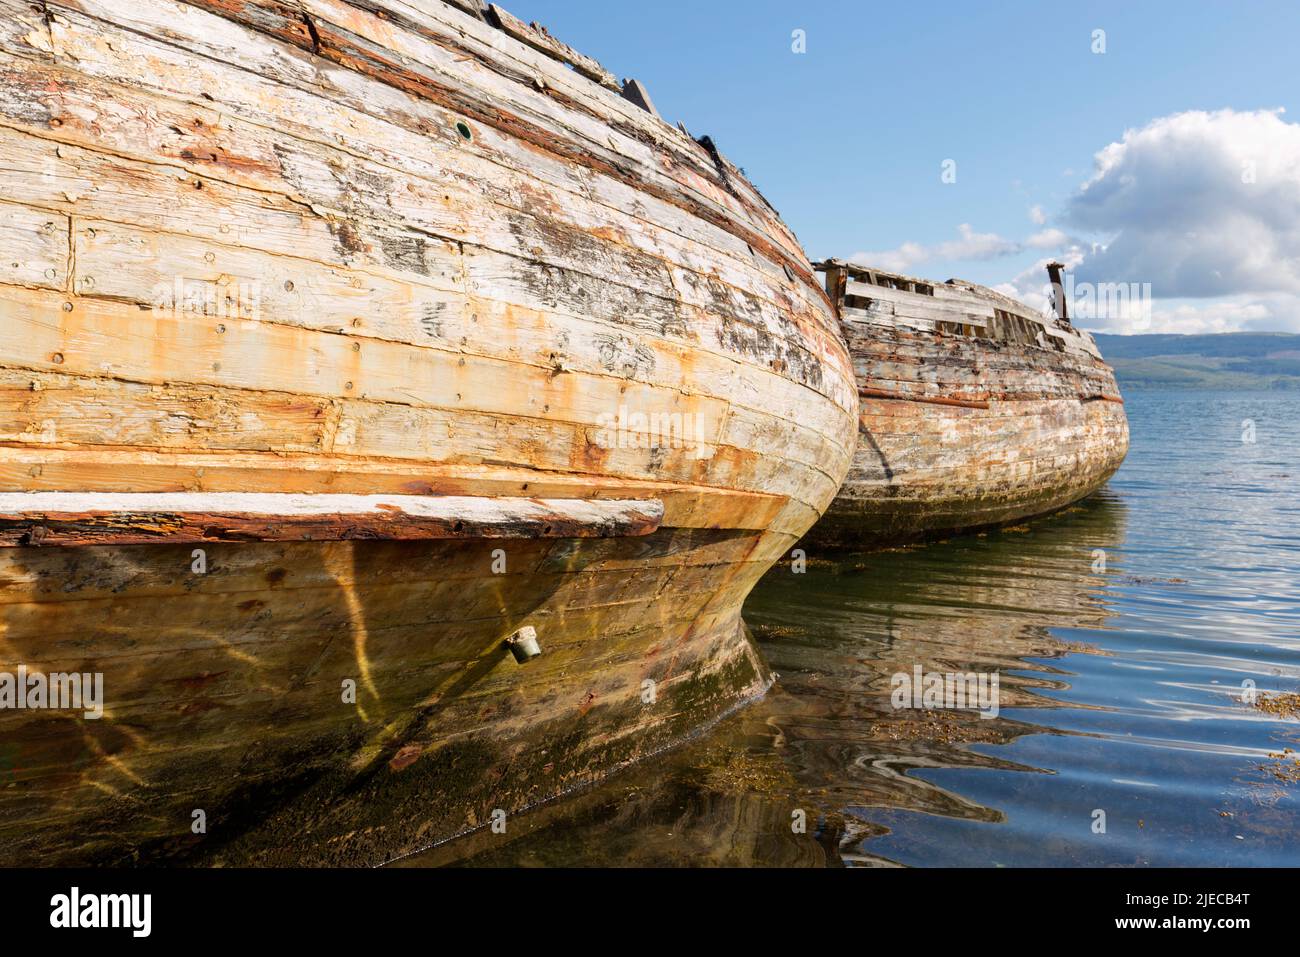 Abandoned old wooden fishing boats, Isle of Mull Stock Photo